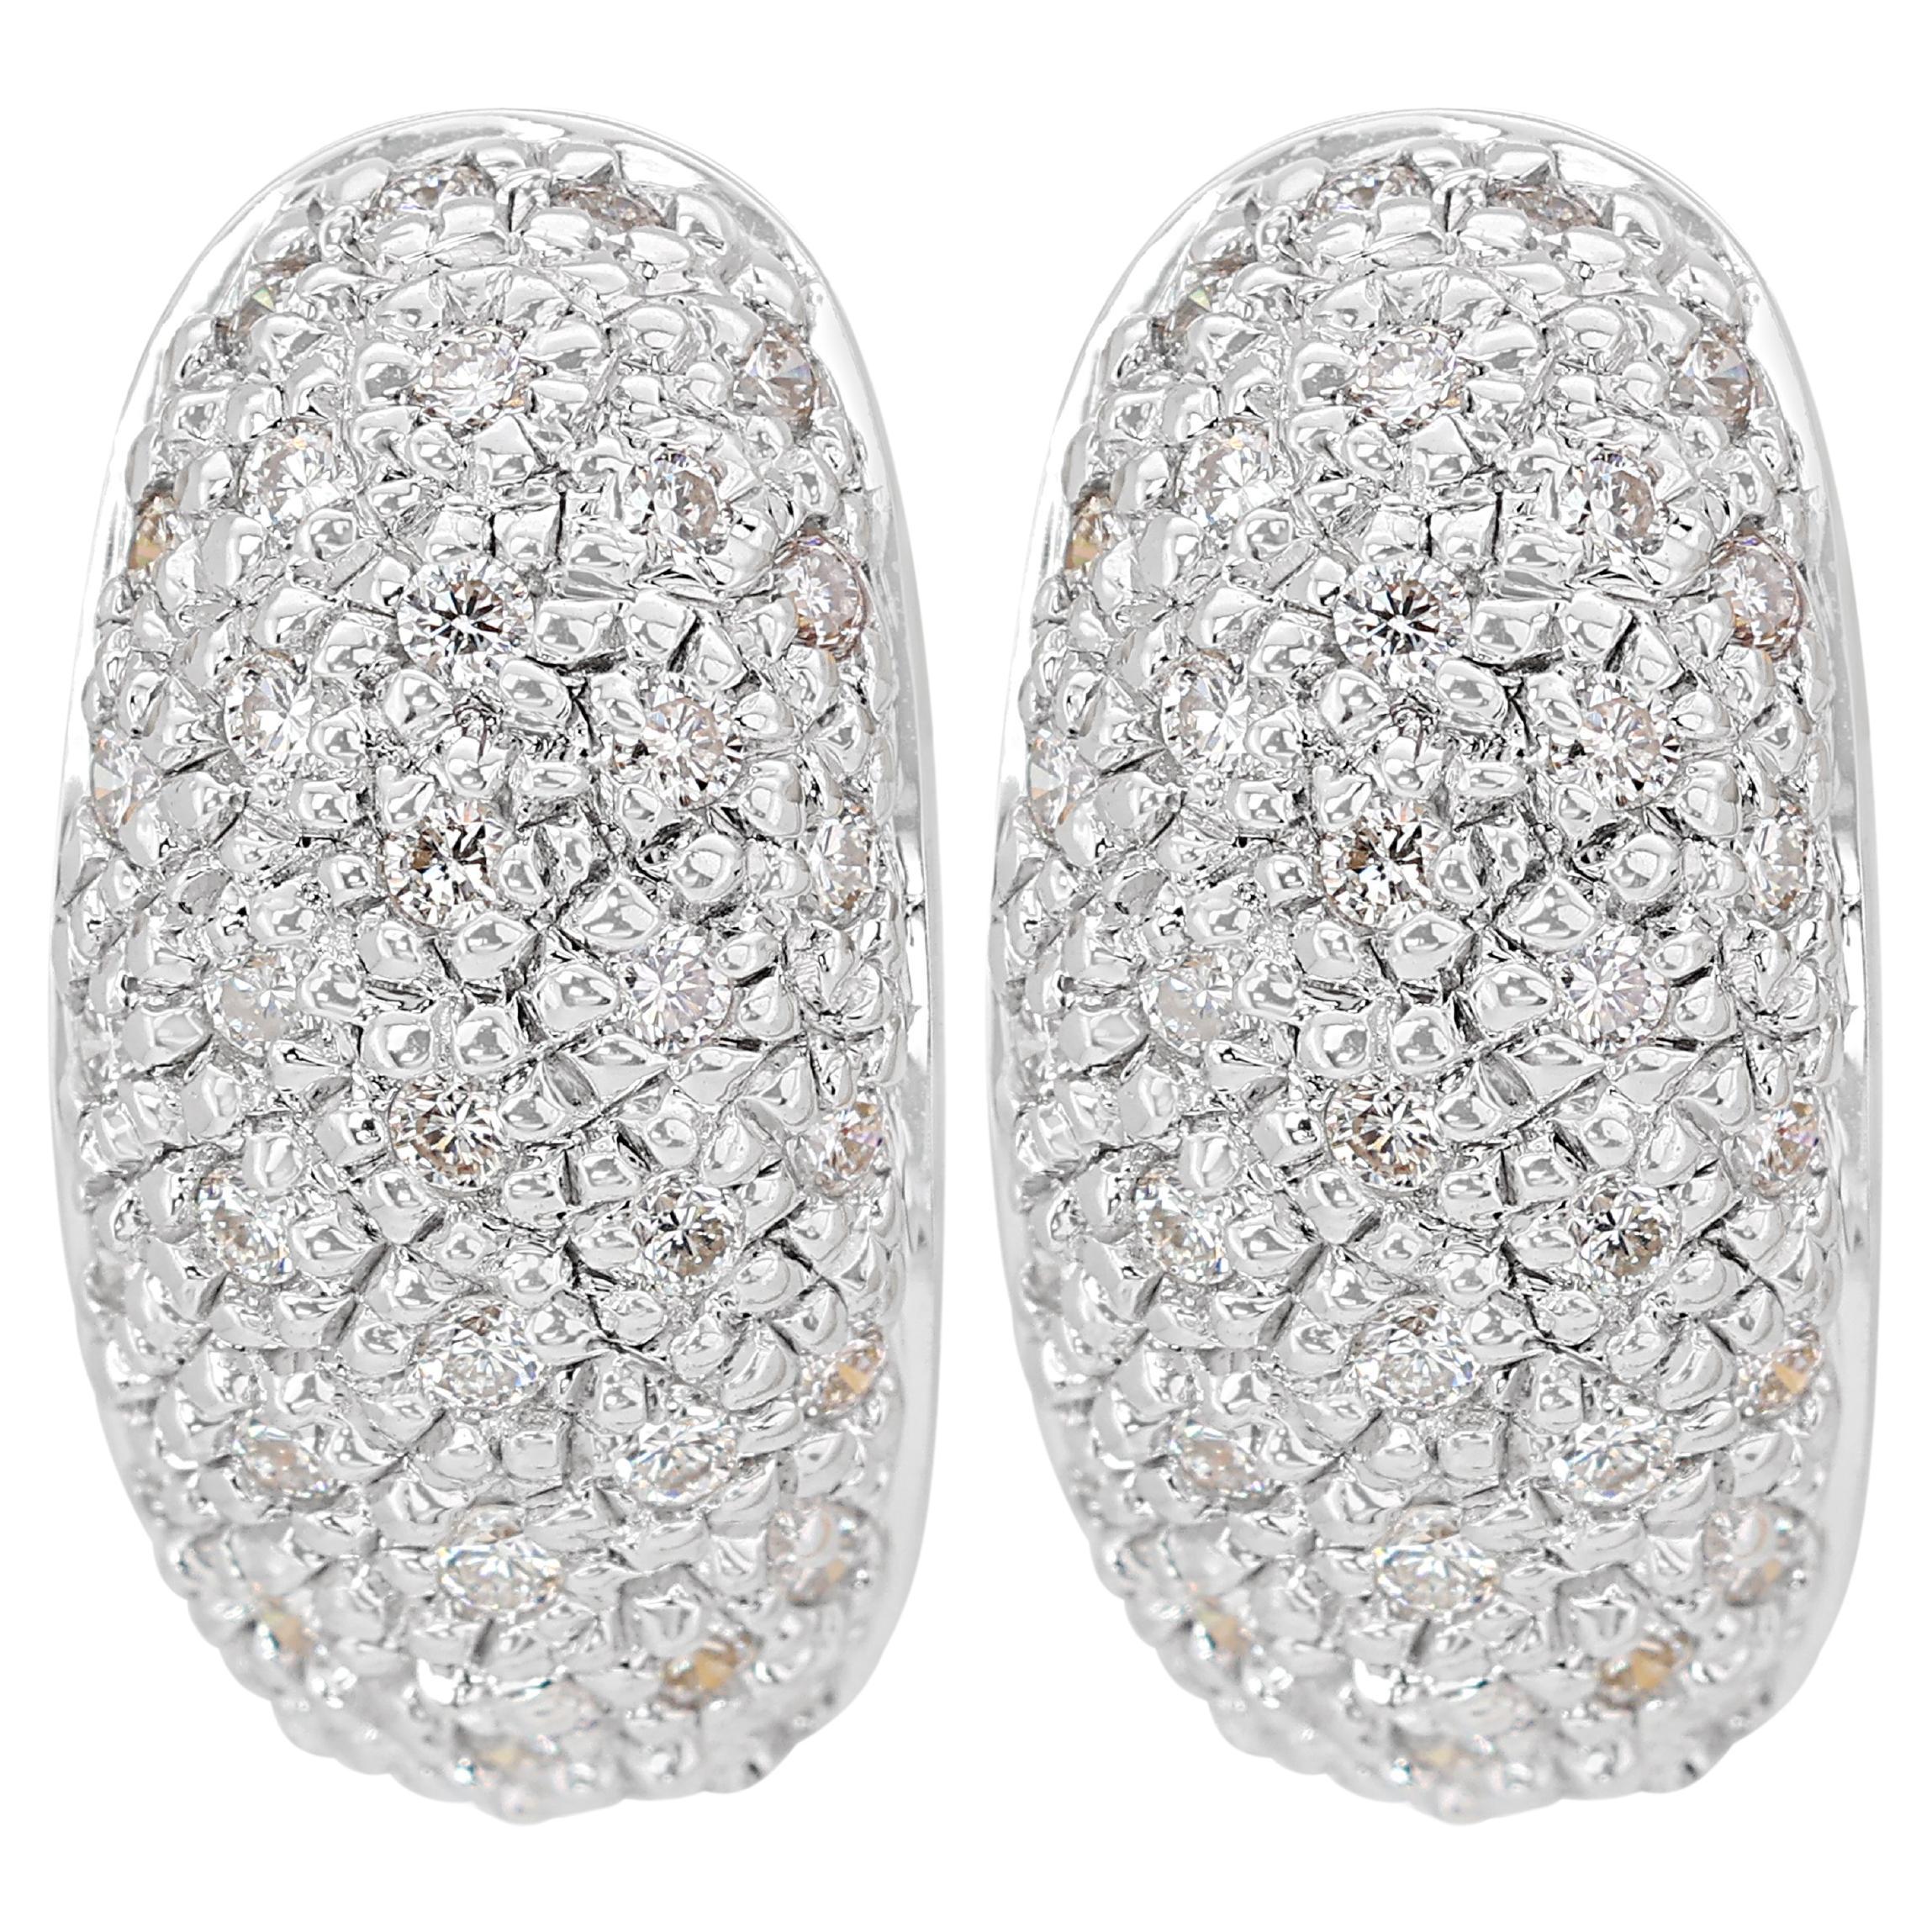 Fascinating 0.40ct Diamond Earrings in 18k White Gold For Sale